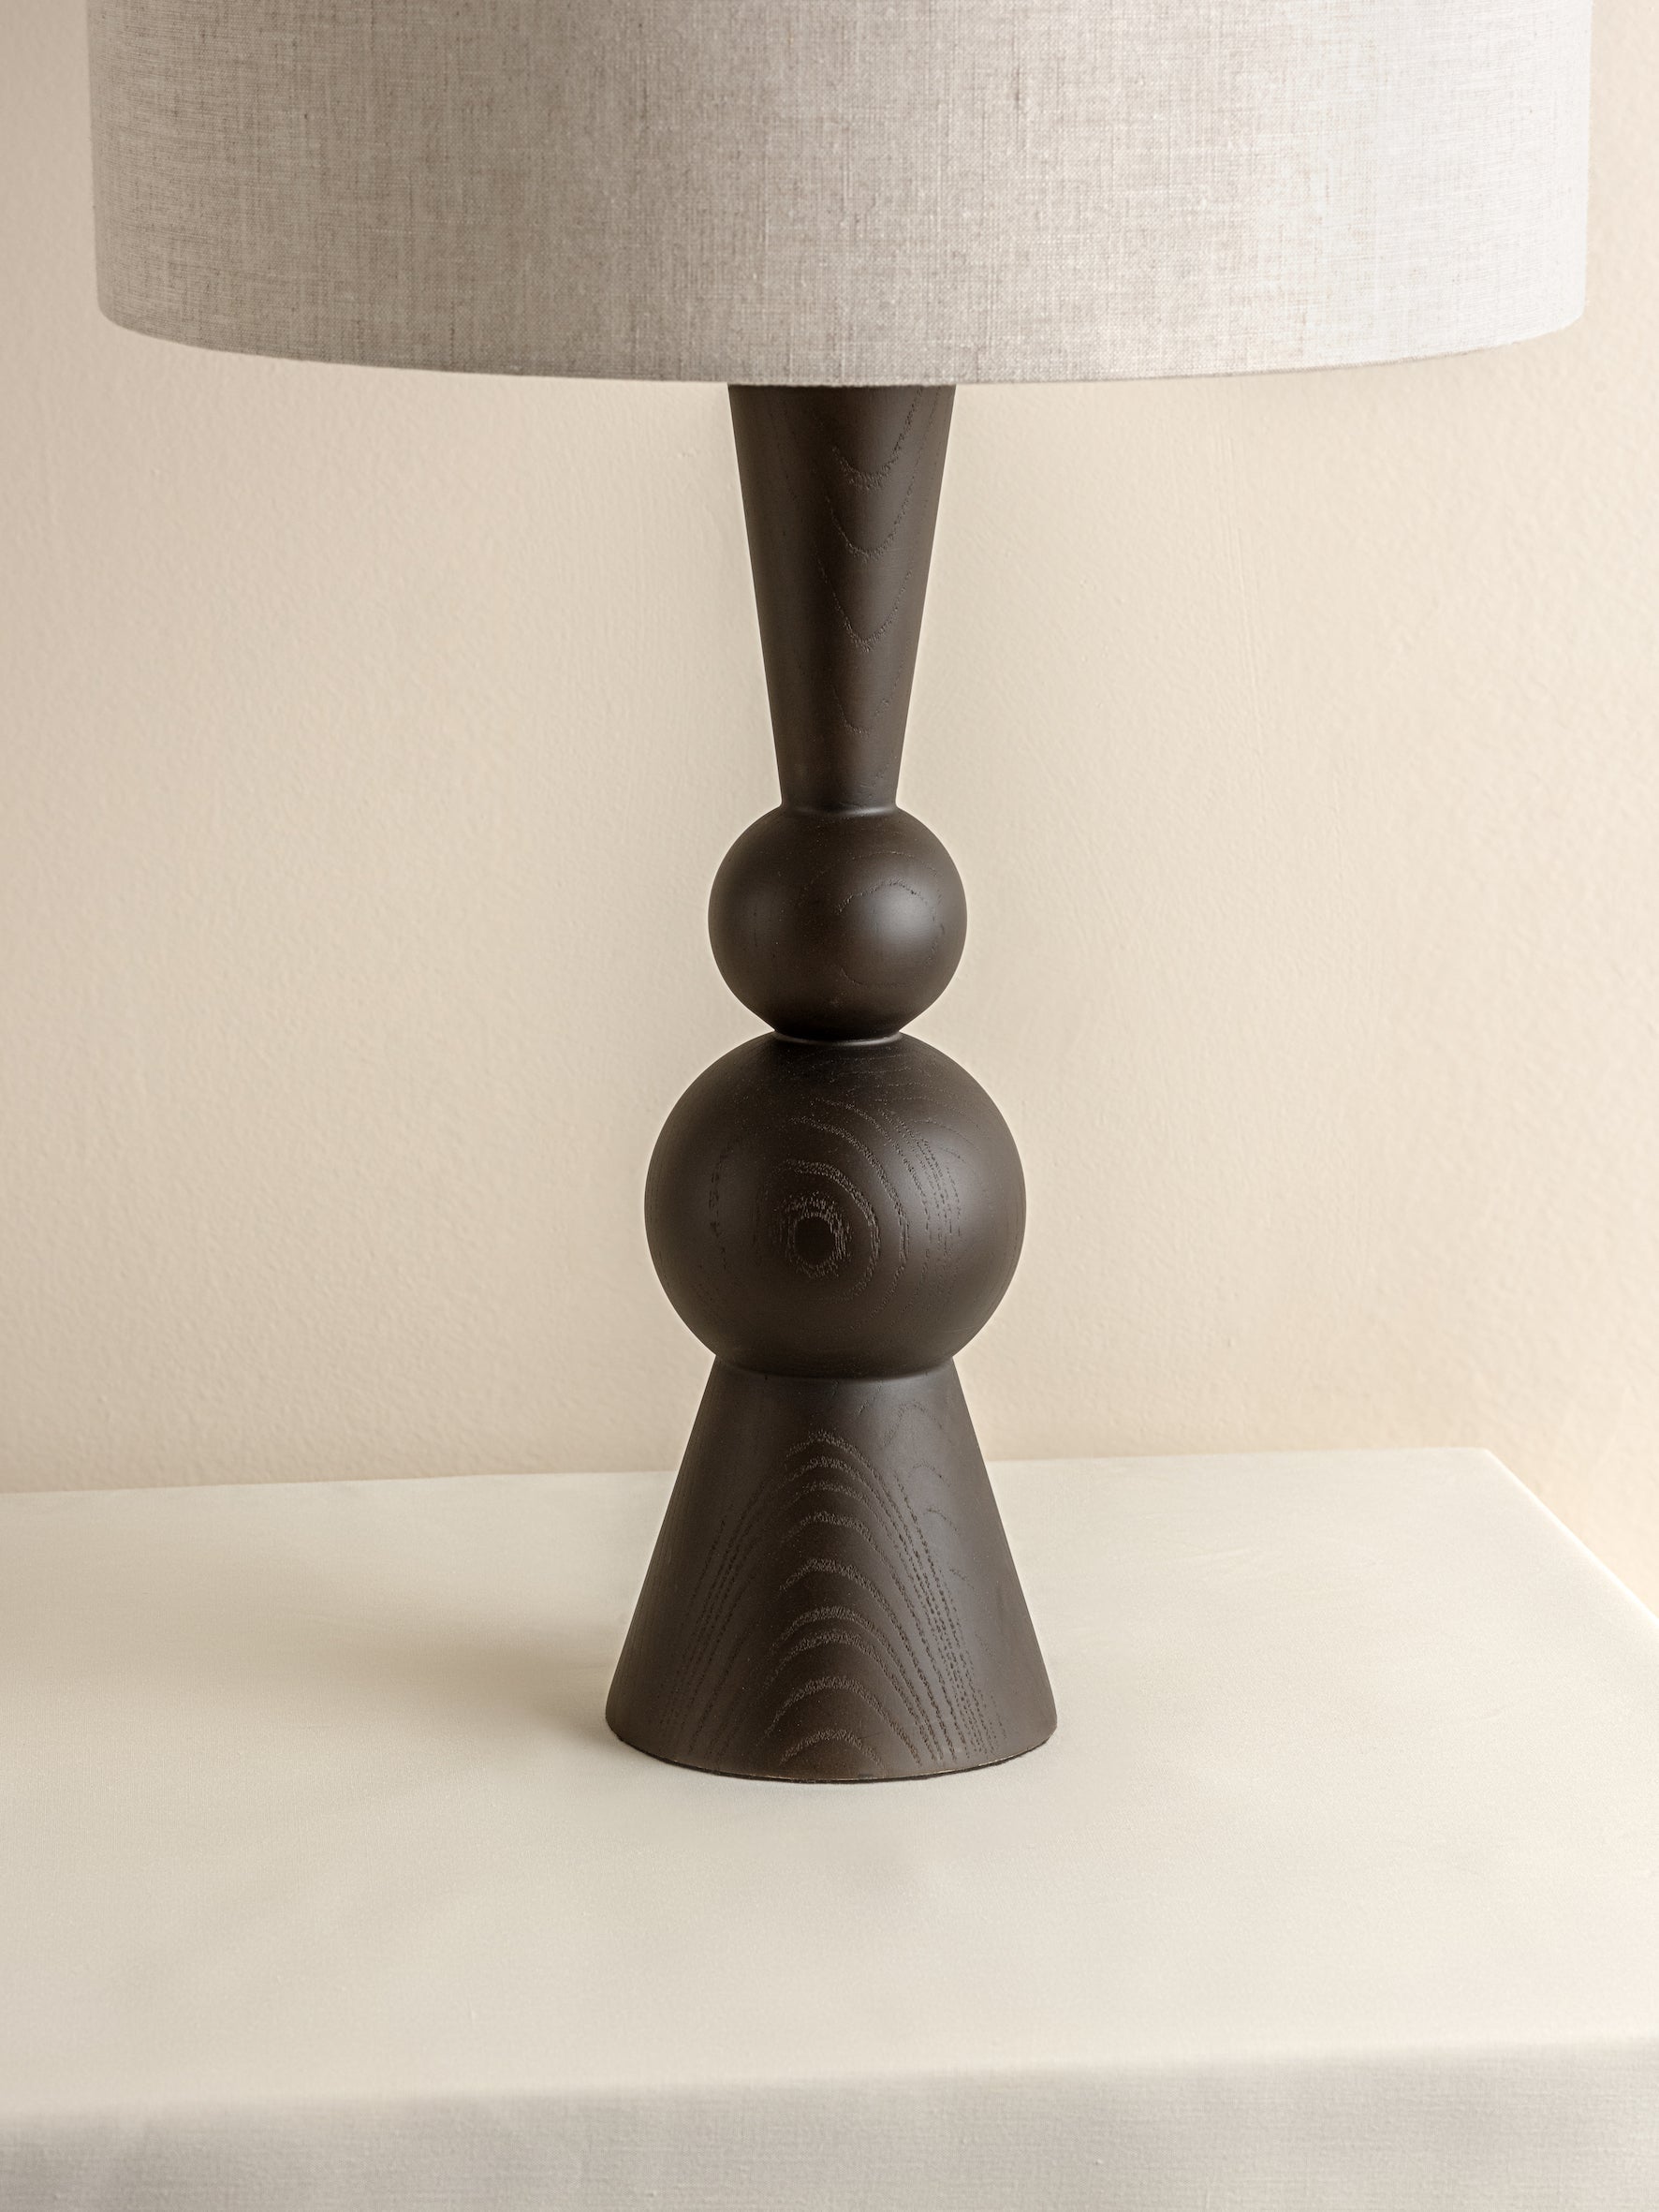 Carmine - dark wood and linen table lamp | Table Lamp | Lights & Lamps Inc | Modern Affordable Designer Lighting | USA